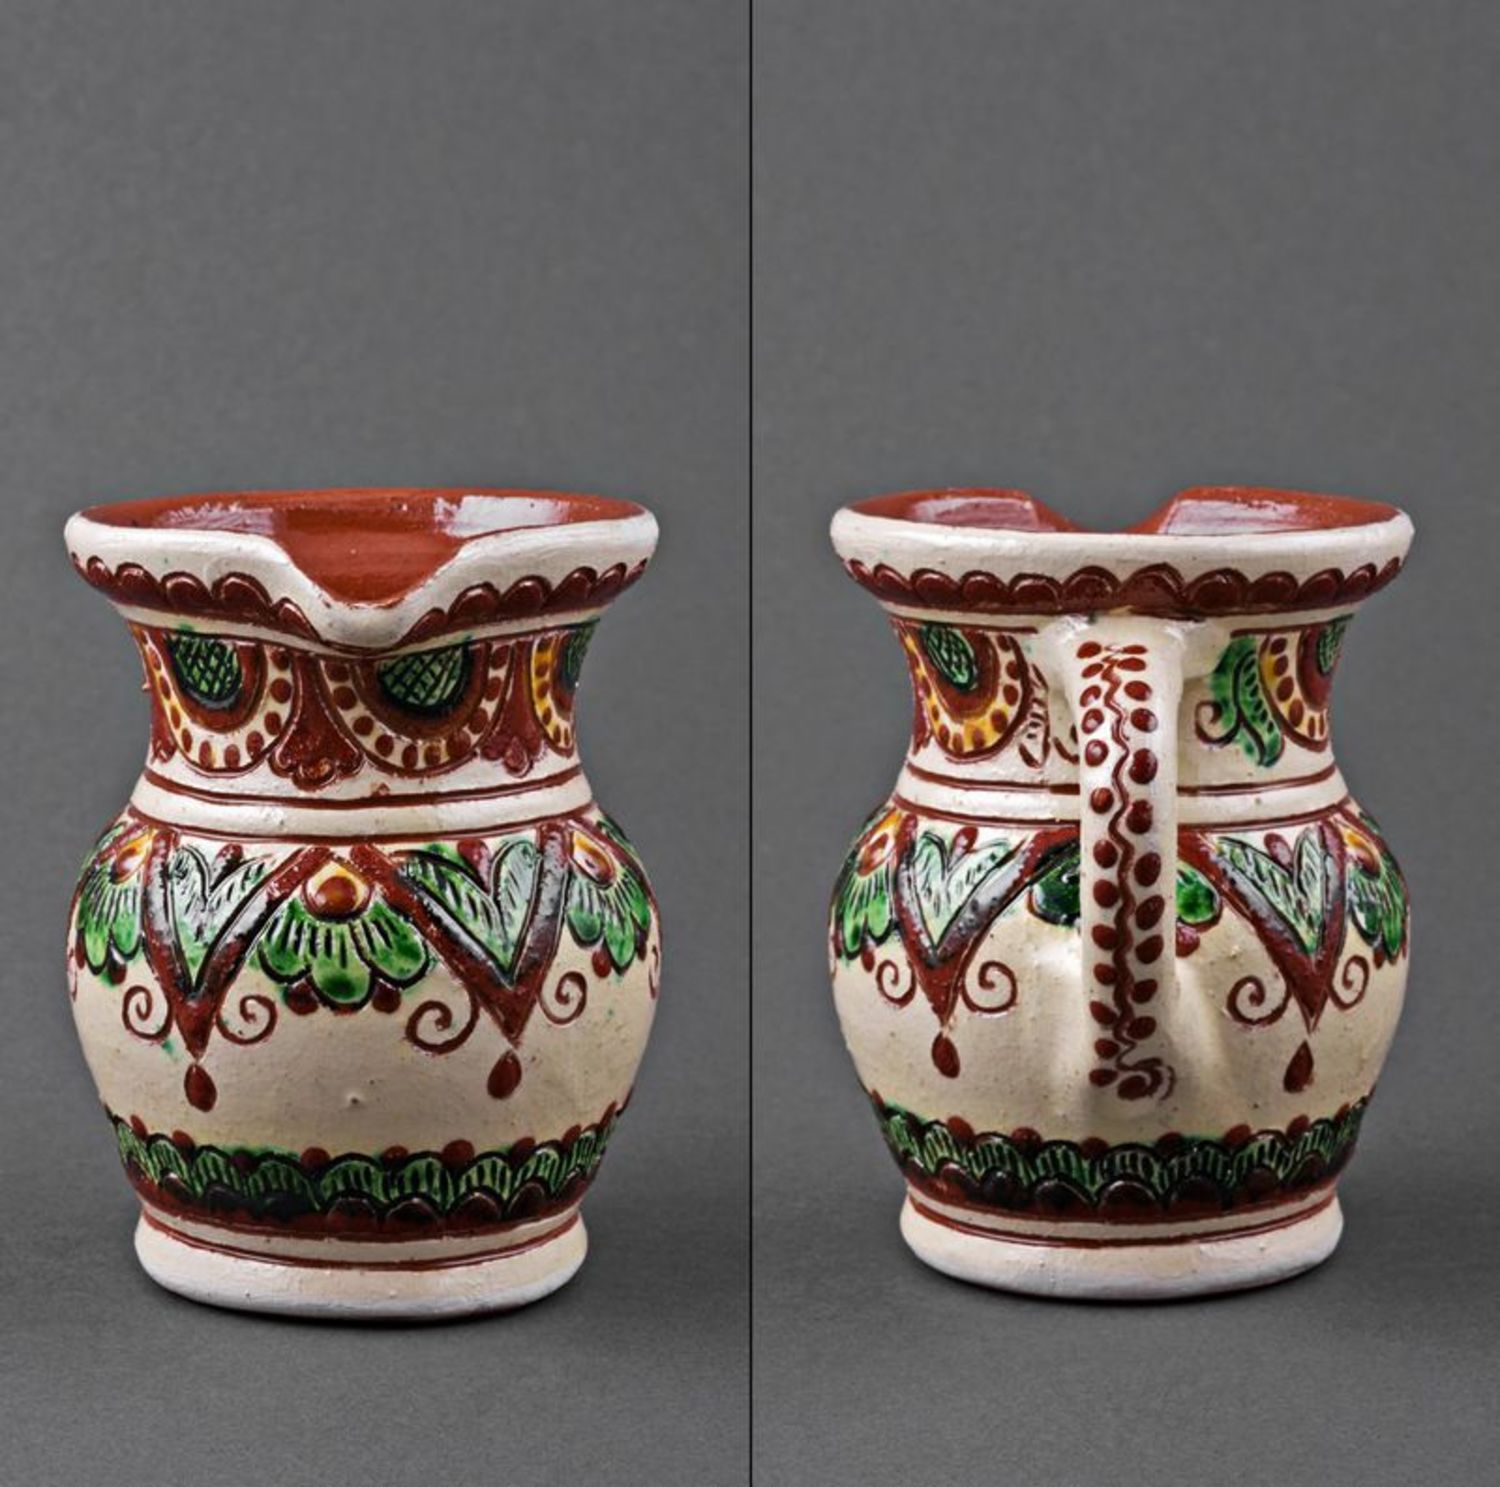 Decorative clay pitcher photo 5